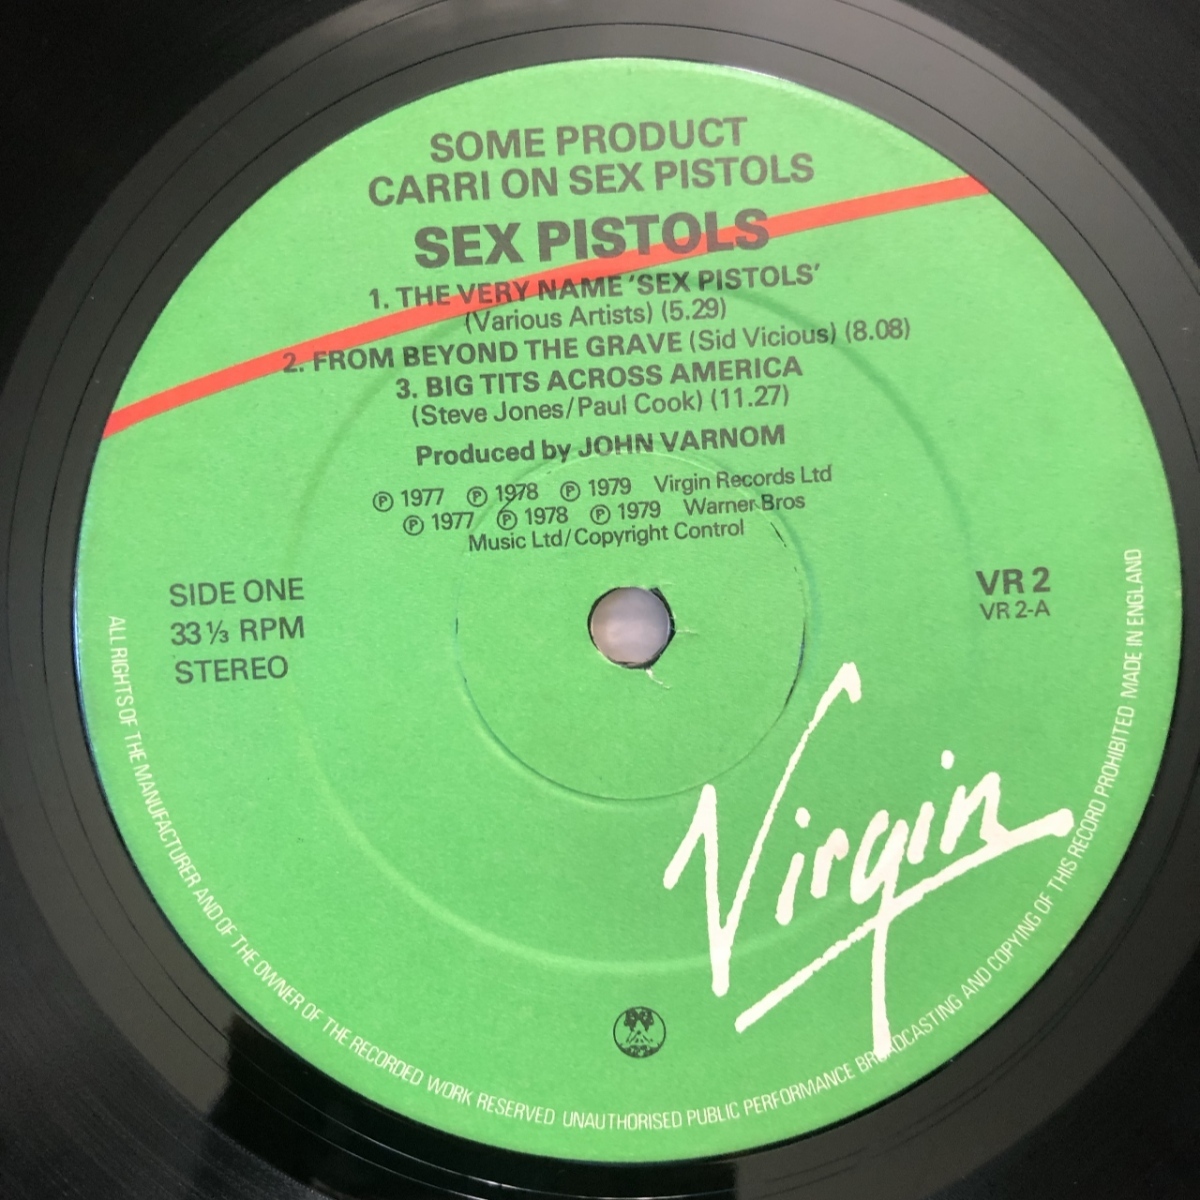  beautiful record sex * piste ruzSex Pistols 1979 year LP record Sam * Pro duct Some Product - Carri On Sex Pistols Britain record Punk